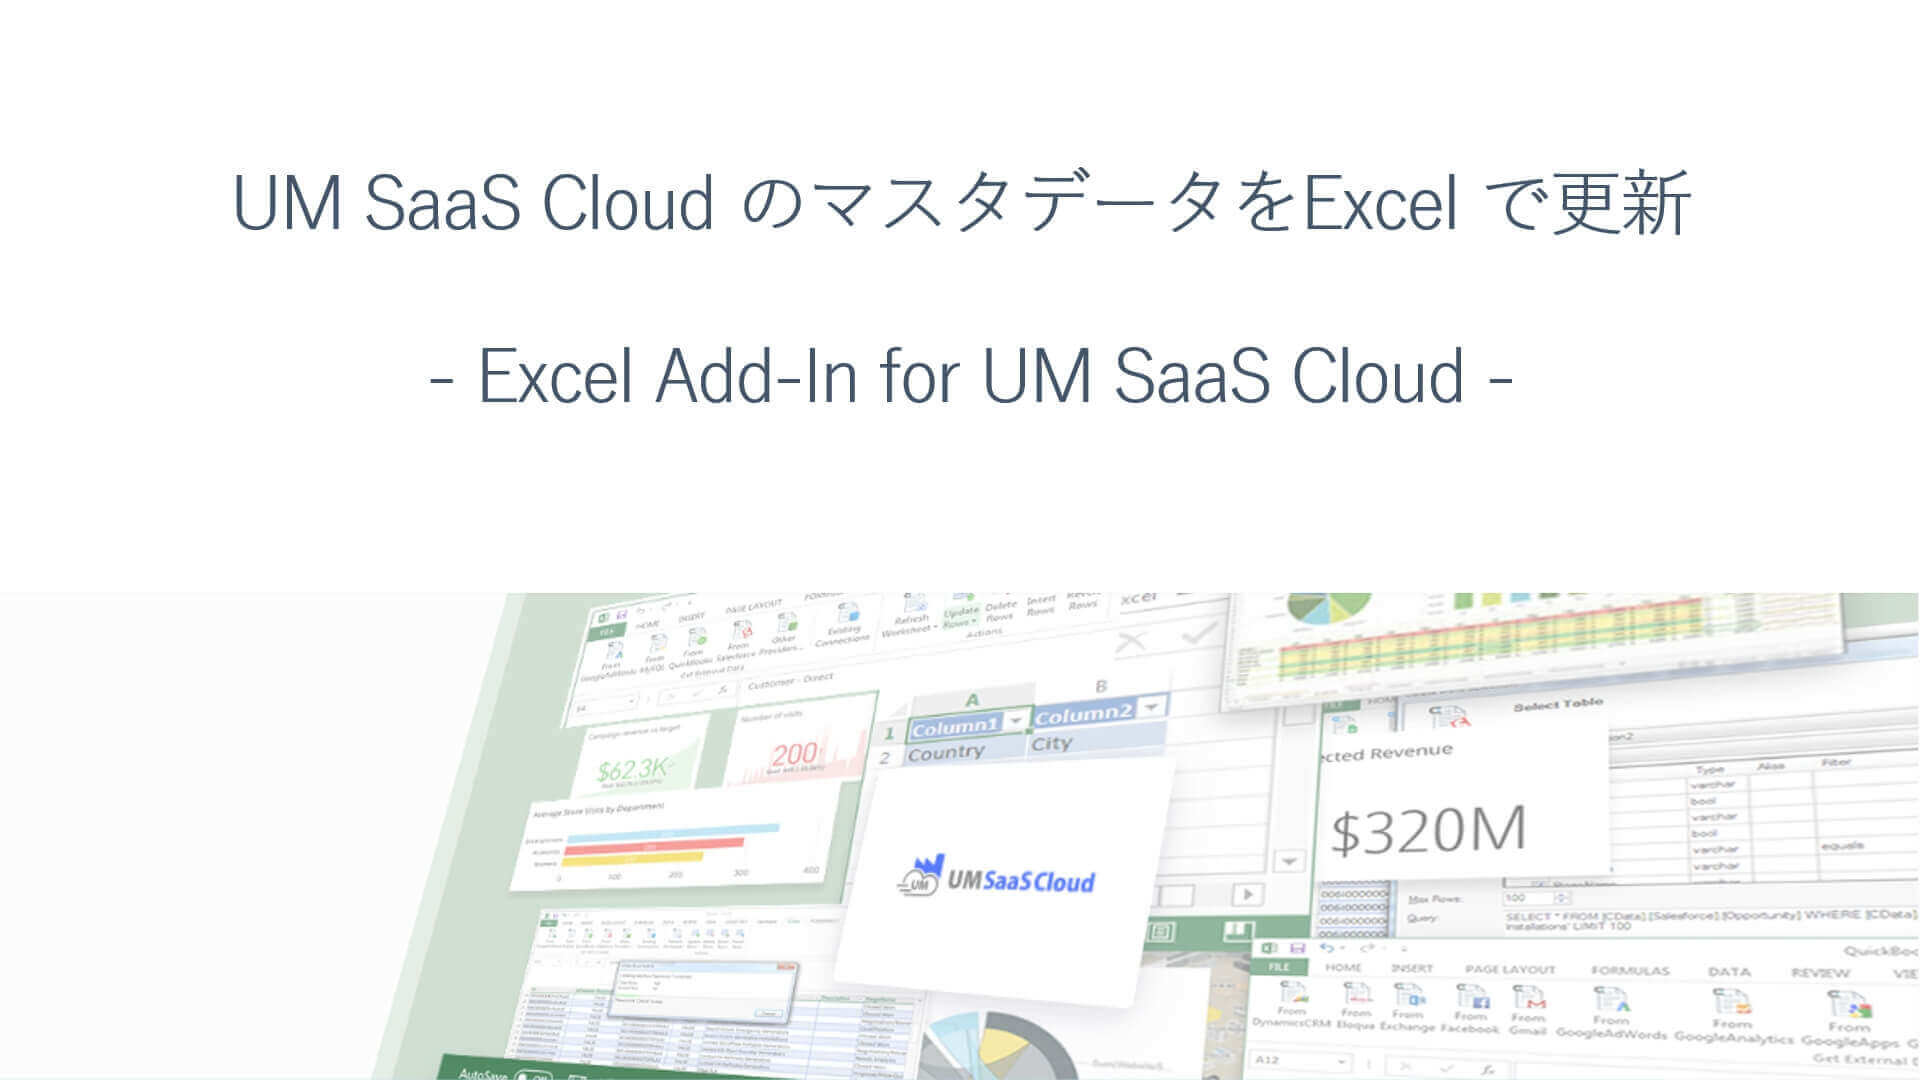 UM SaaS Cloud のマスタデータをExcel で更新